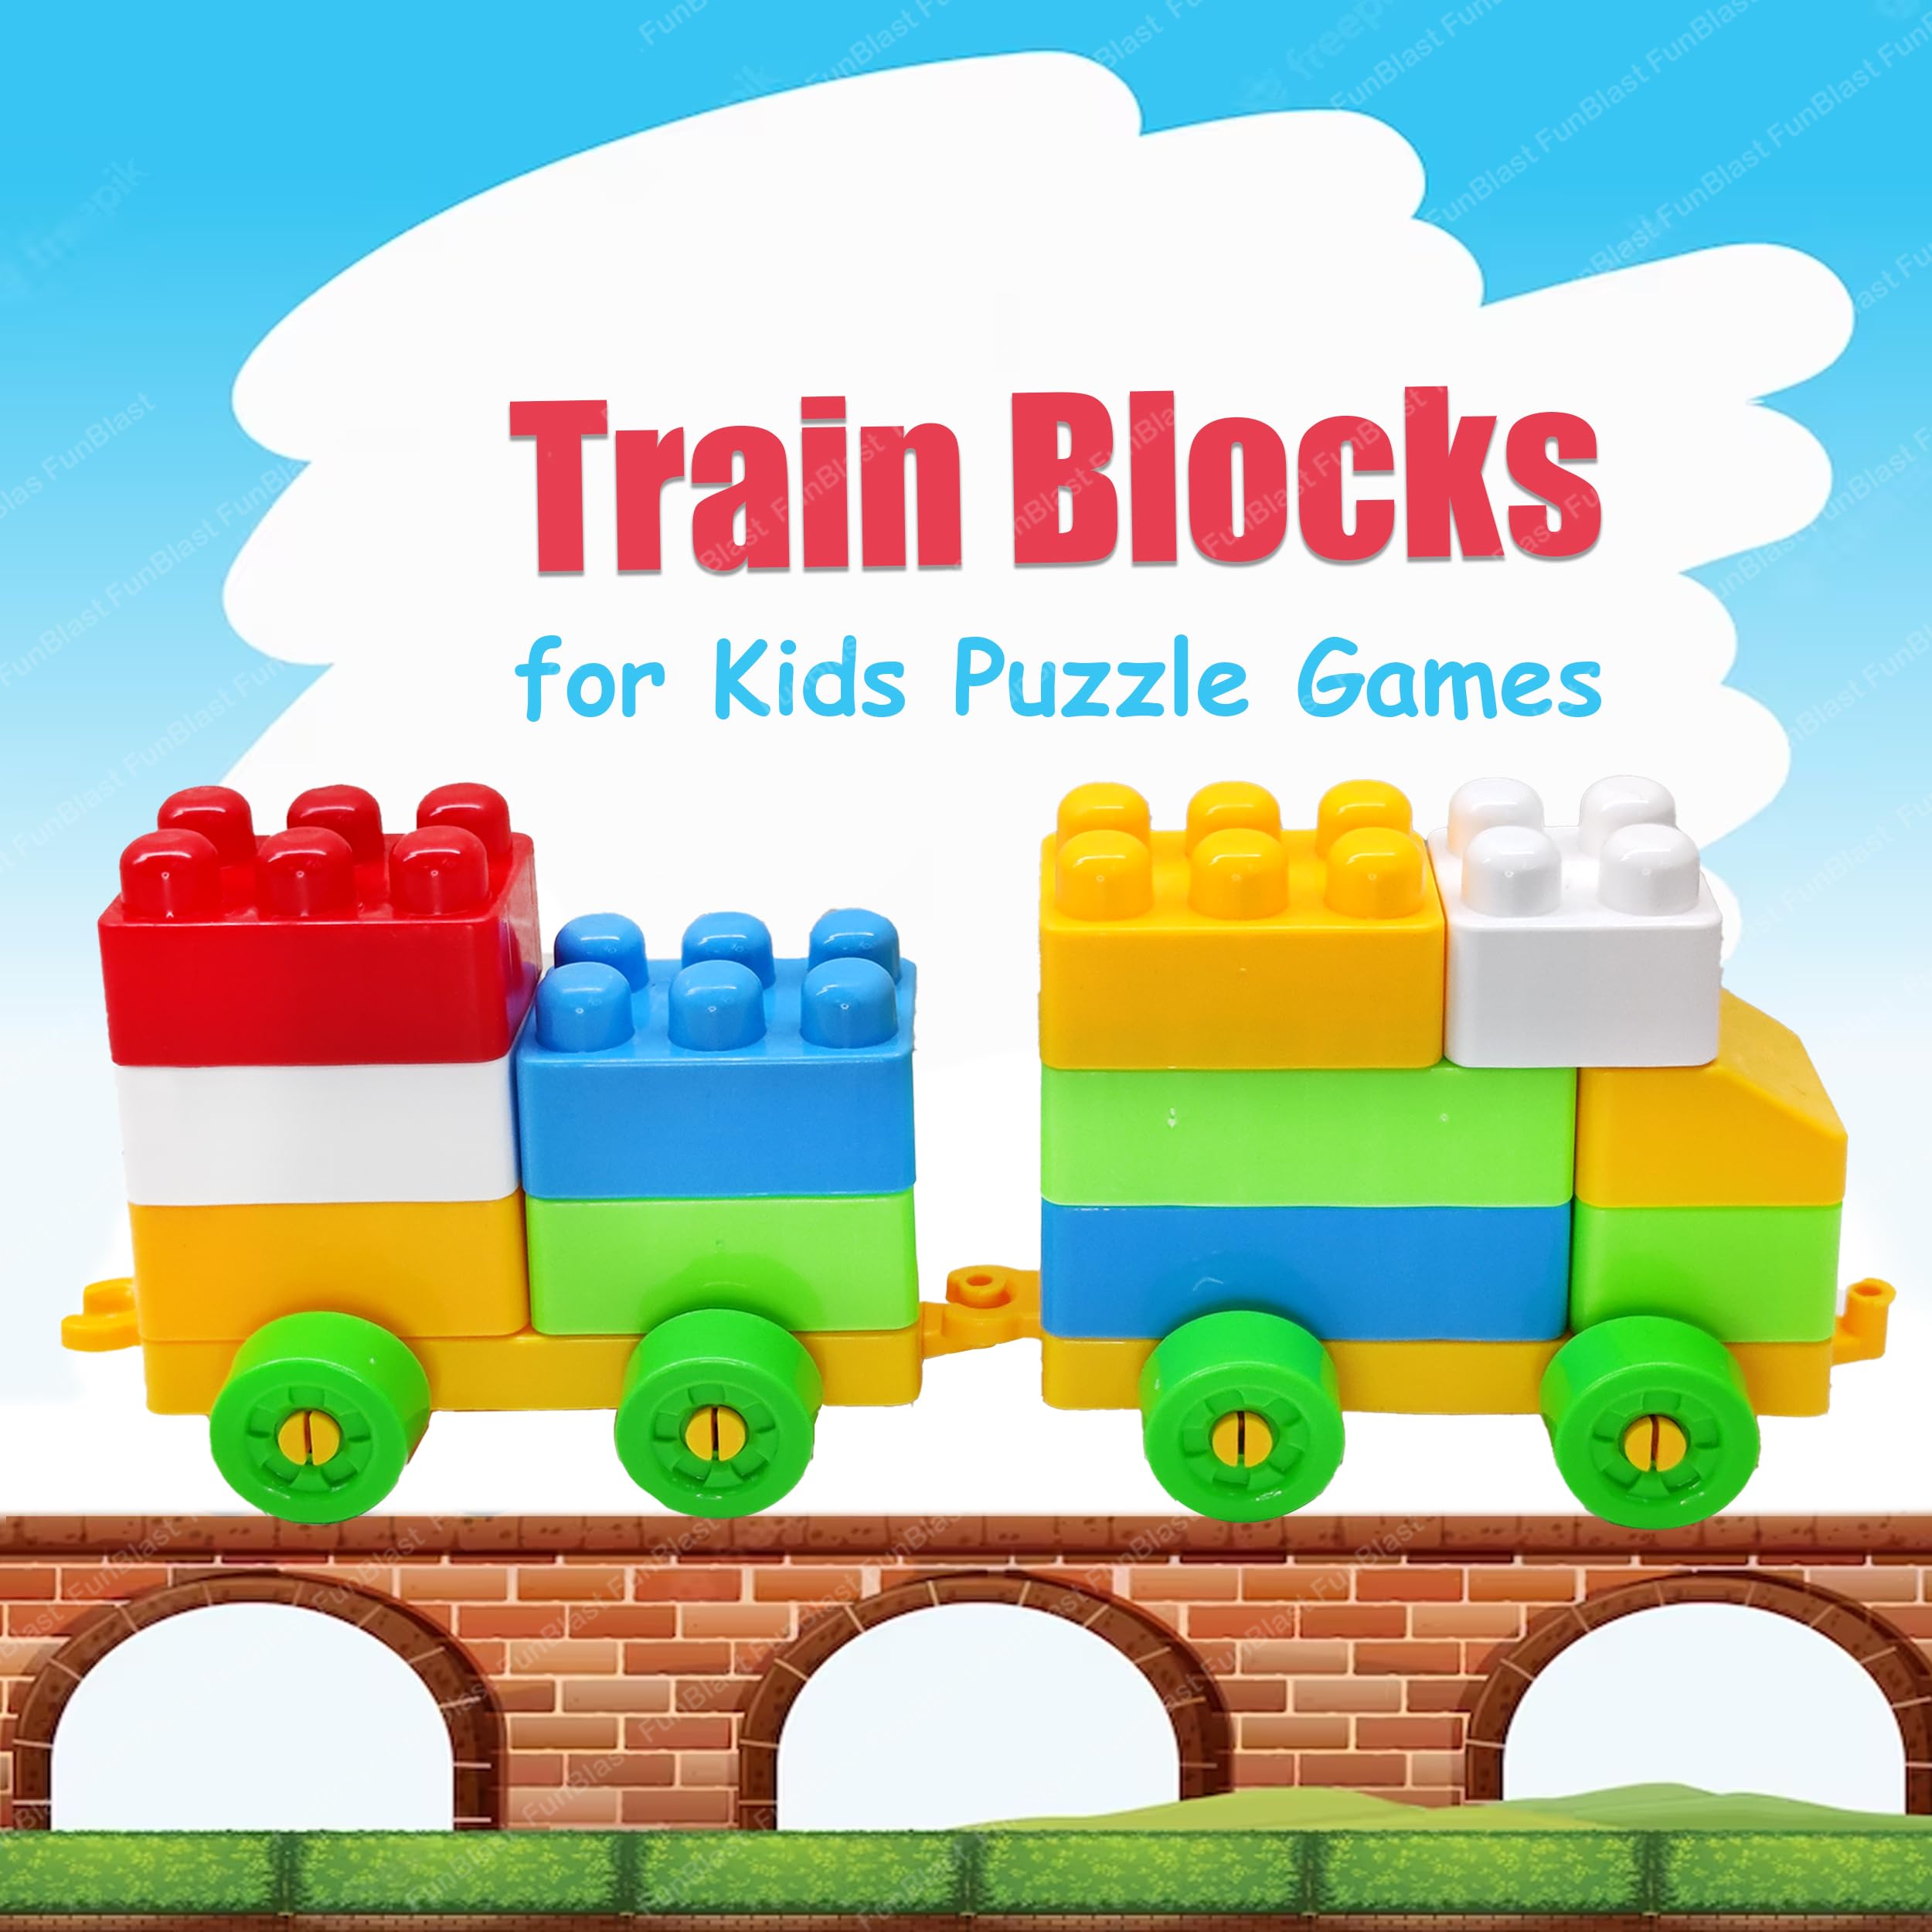 FunBlast Building Blocks for Kids with Wheel, 64 Pcs with 16 Movable Wheels Big Mega Sized Blocks, Block Game for Kids/Boys/Children (64 Pcs & 16 Wheels) - Multicolor